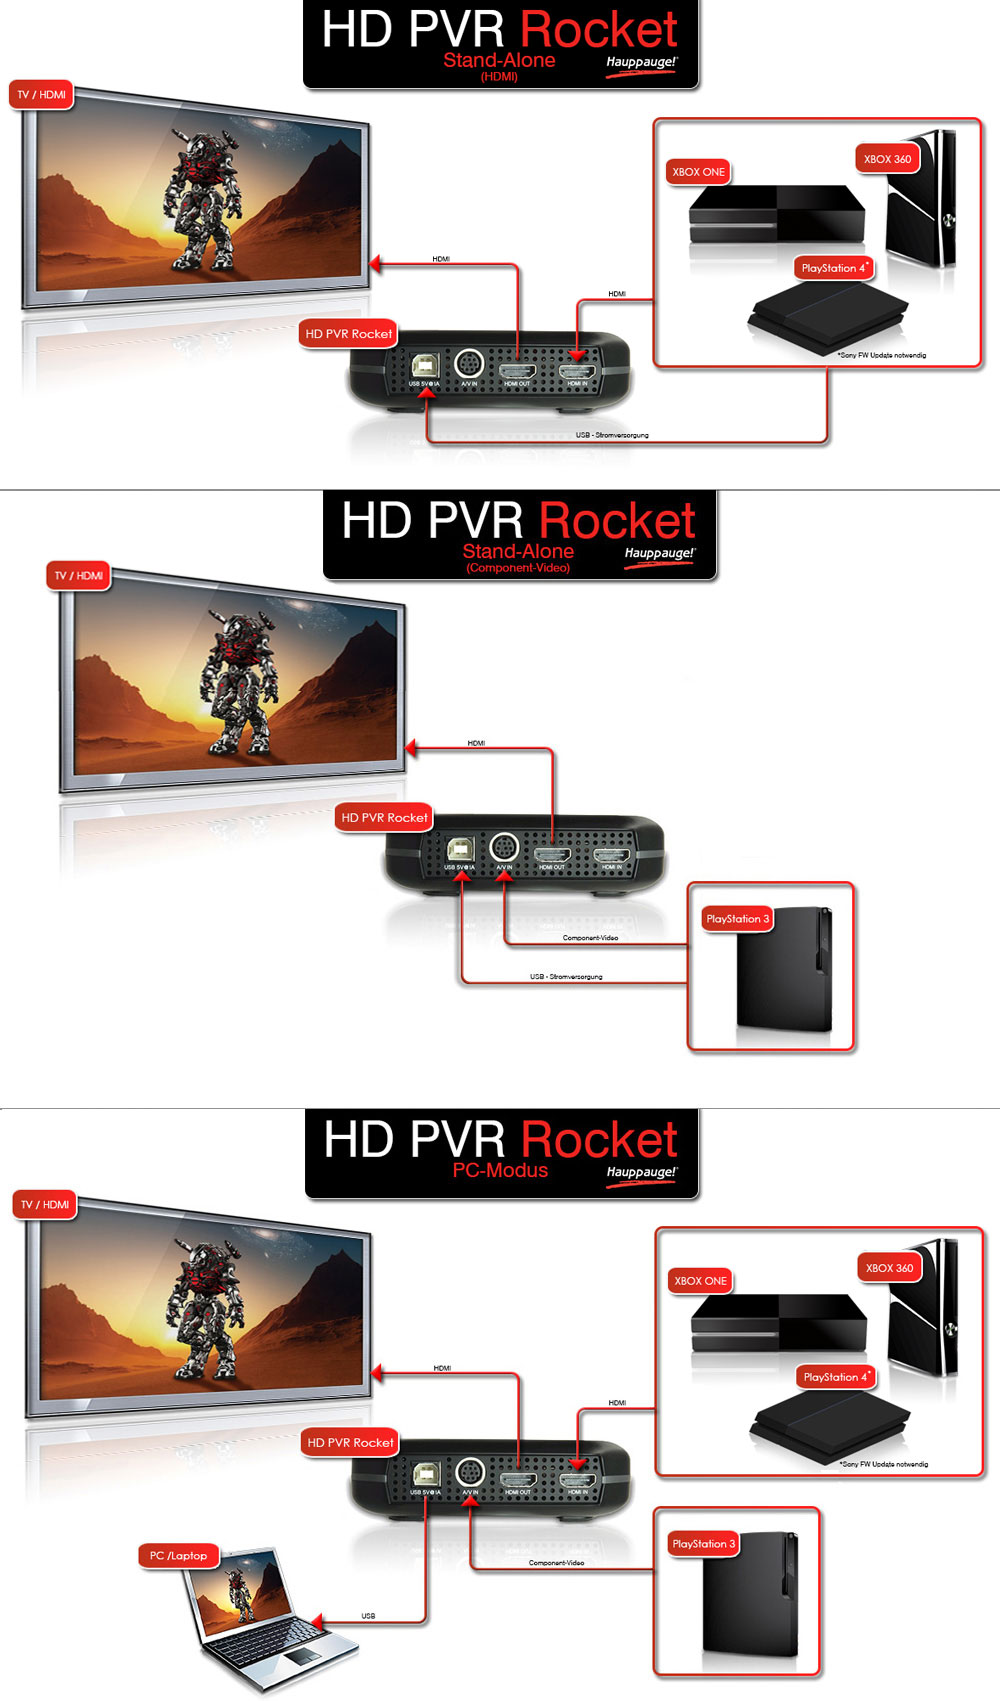 HD PVR Rocket Diagramm